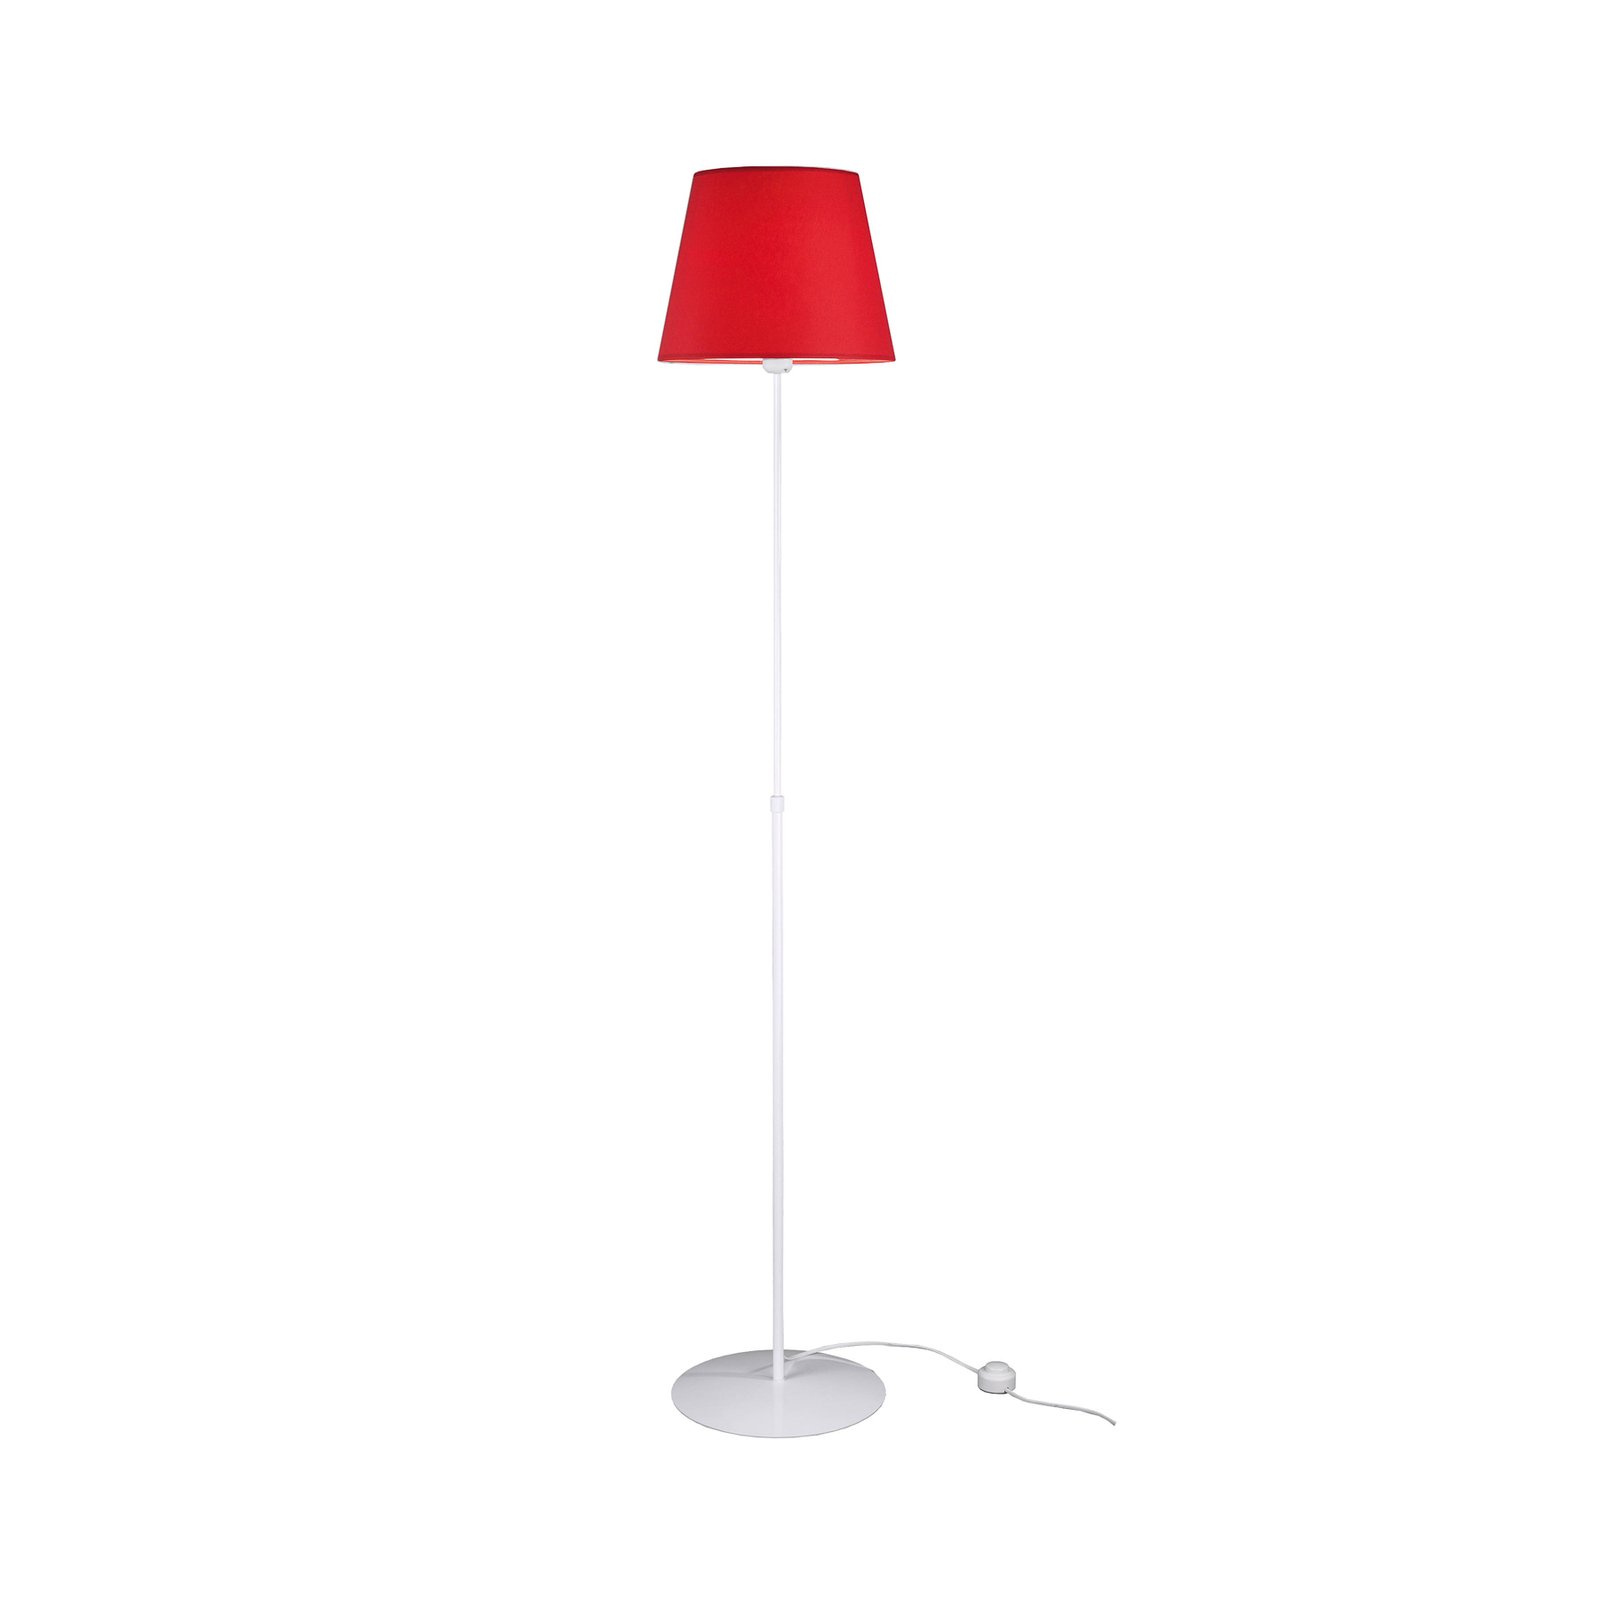 Aluminor Store Stehlampe, weiß/rot